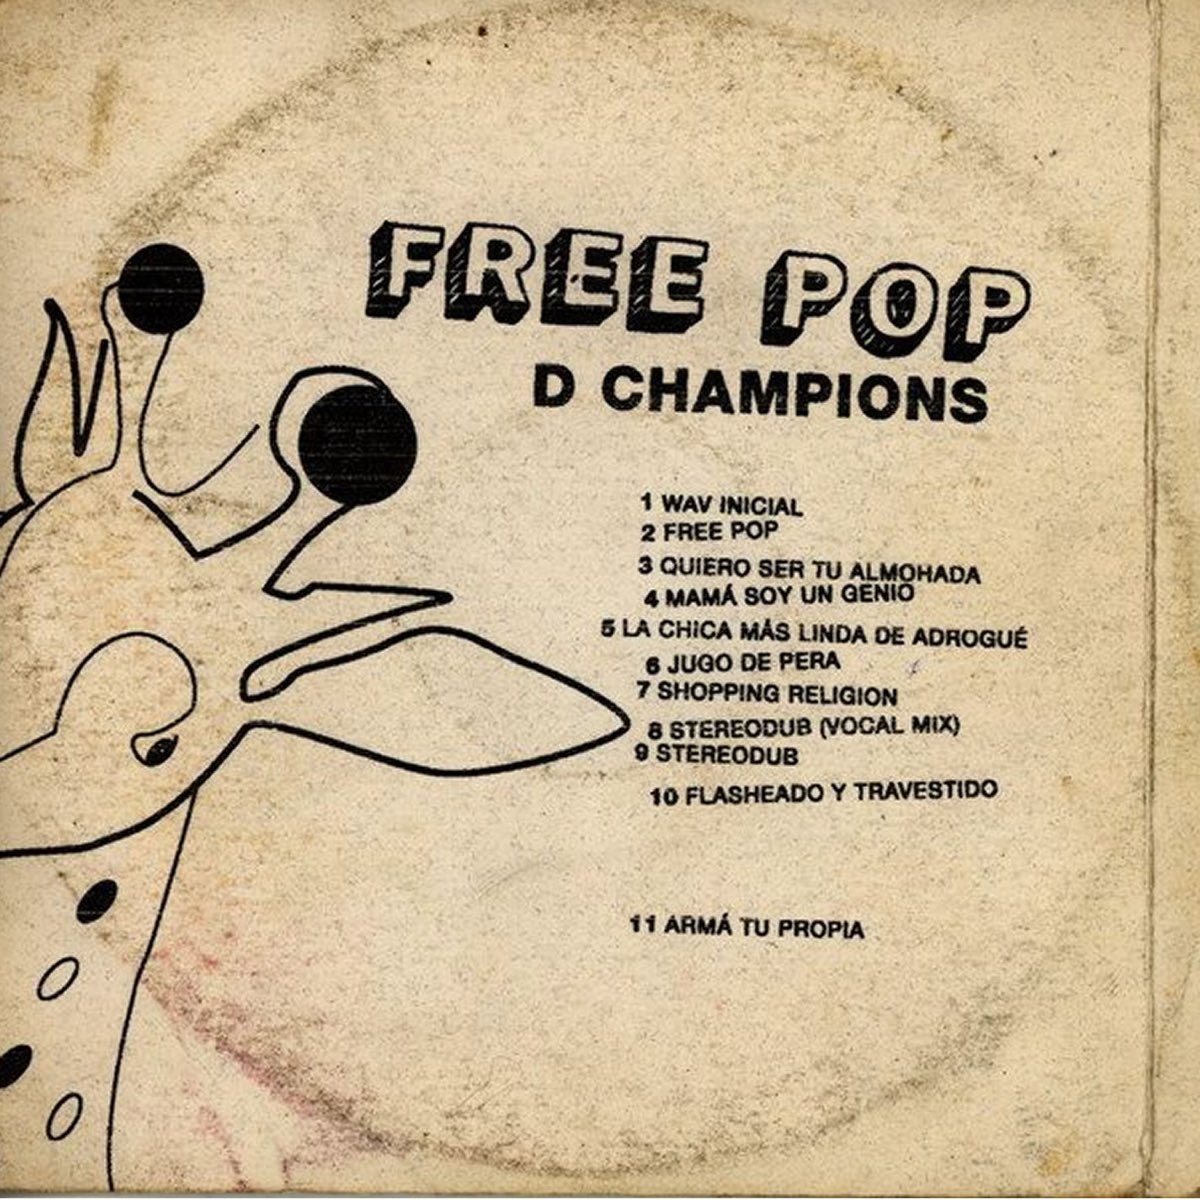 Free Pop - Album by DChampions - Apple Music